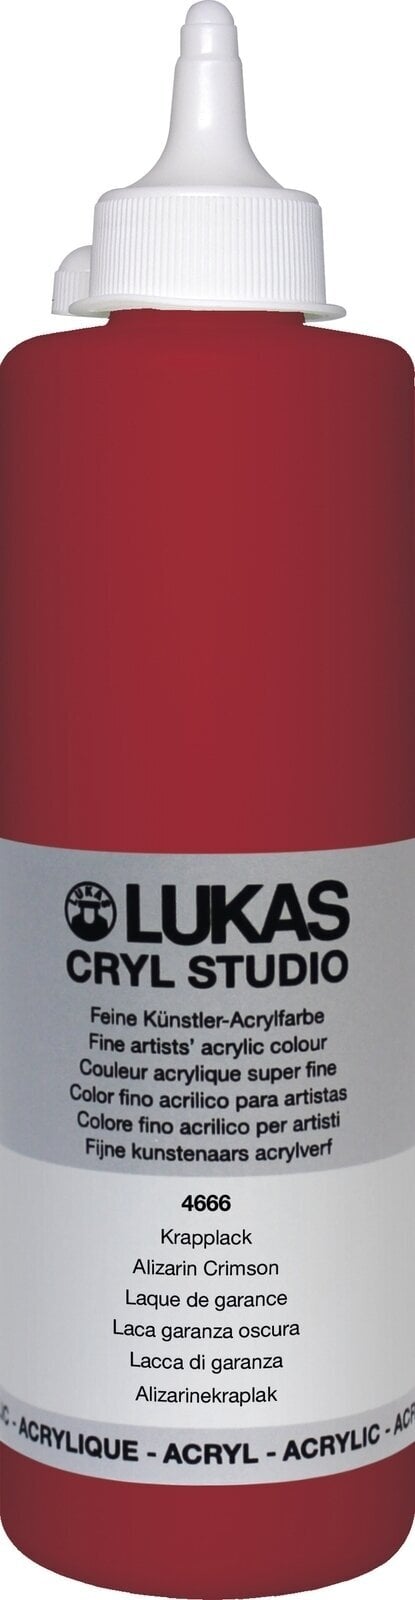 Peinture acrylique Lukas Cryl Studio Plastic Bottle Peinture acrylique Alizarin Crimson 500 ml 1 pc